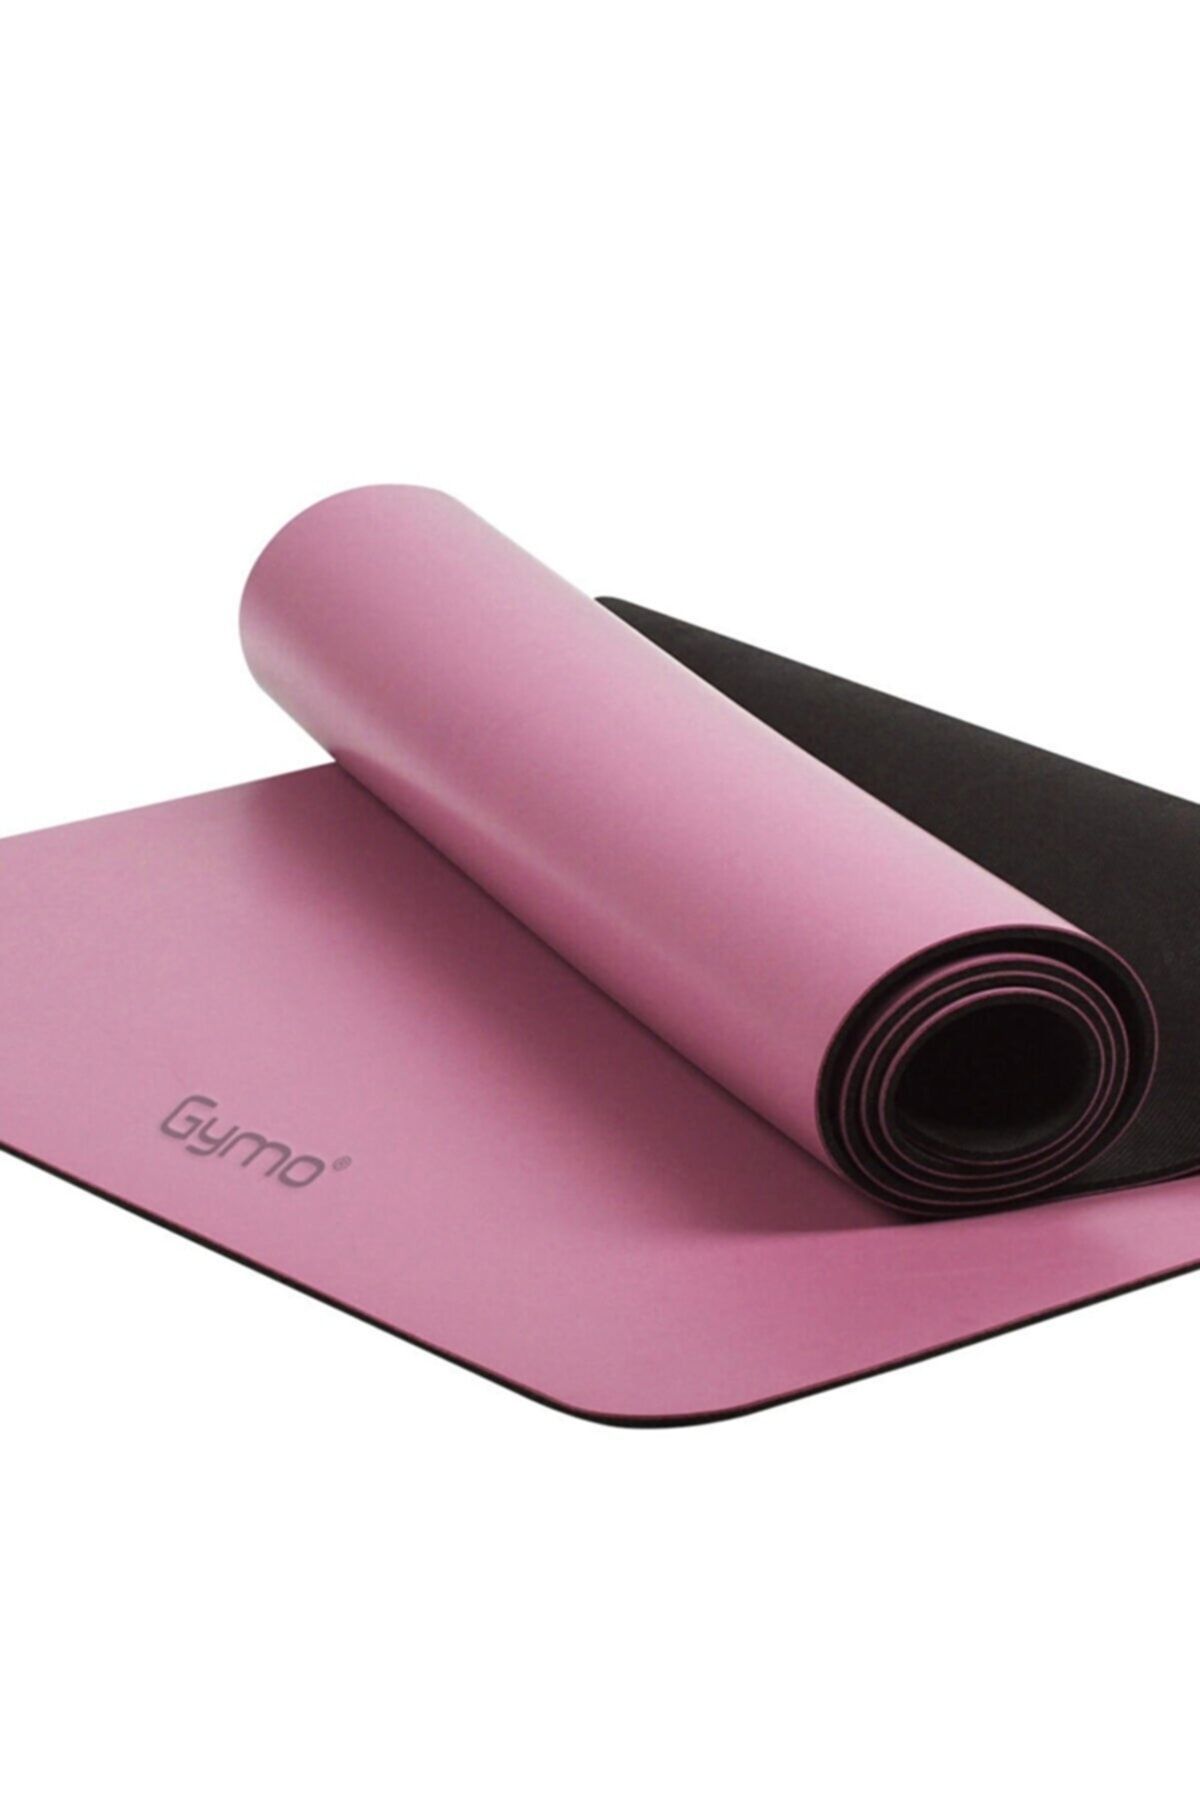 Gymo Pu Rubber 5mm Profesyonel Pilates Minderi Yoga Matı Pembe Renk